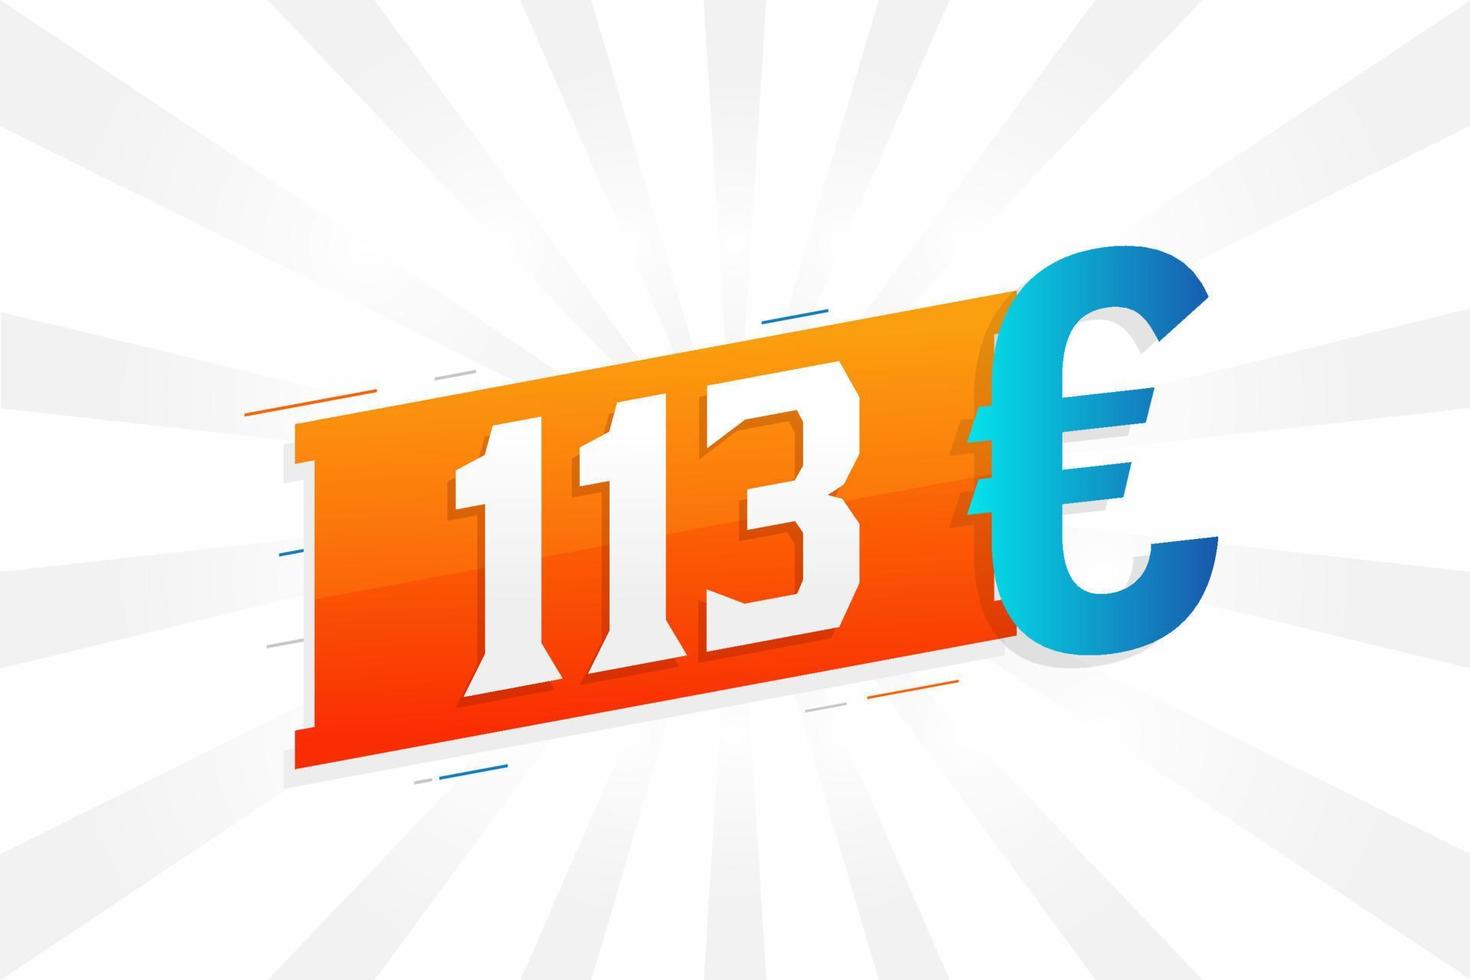 Símbolo de texto vectorial de moneda de 113 euros. 113 euro vector de stock de dinero de la unión europea